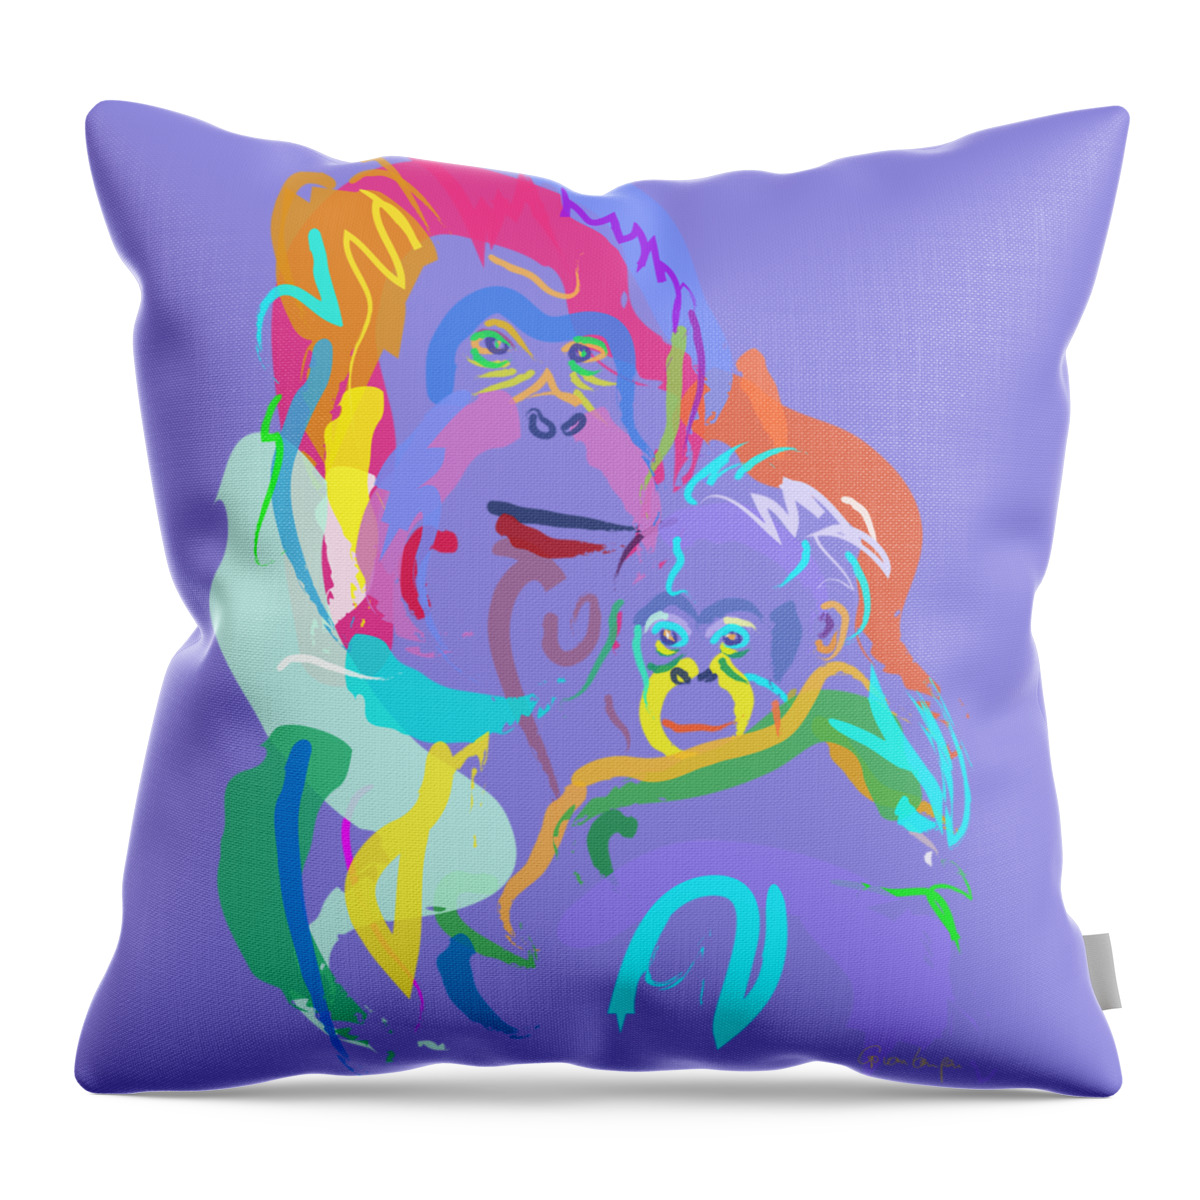 Orangutan Art Throw Pillow featuring the painting Orangutan mom and baby by Go Van Kampen